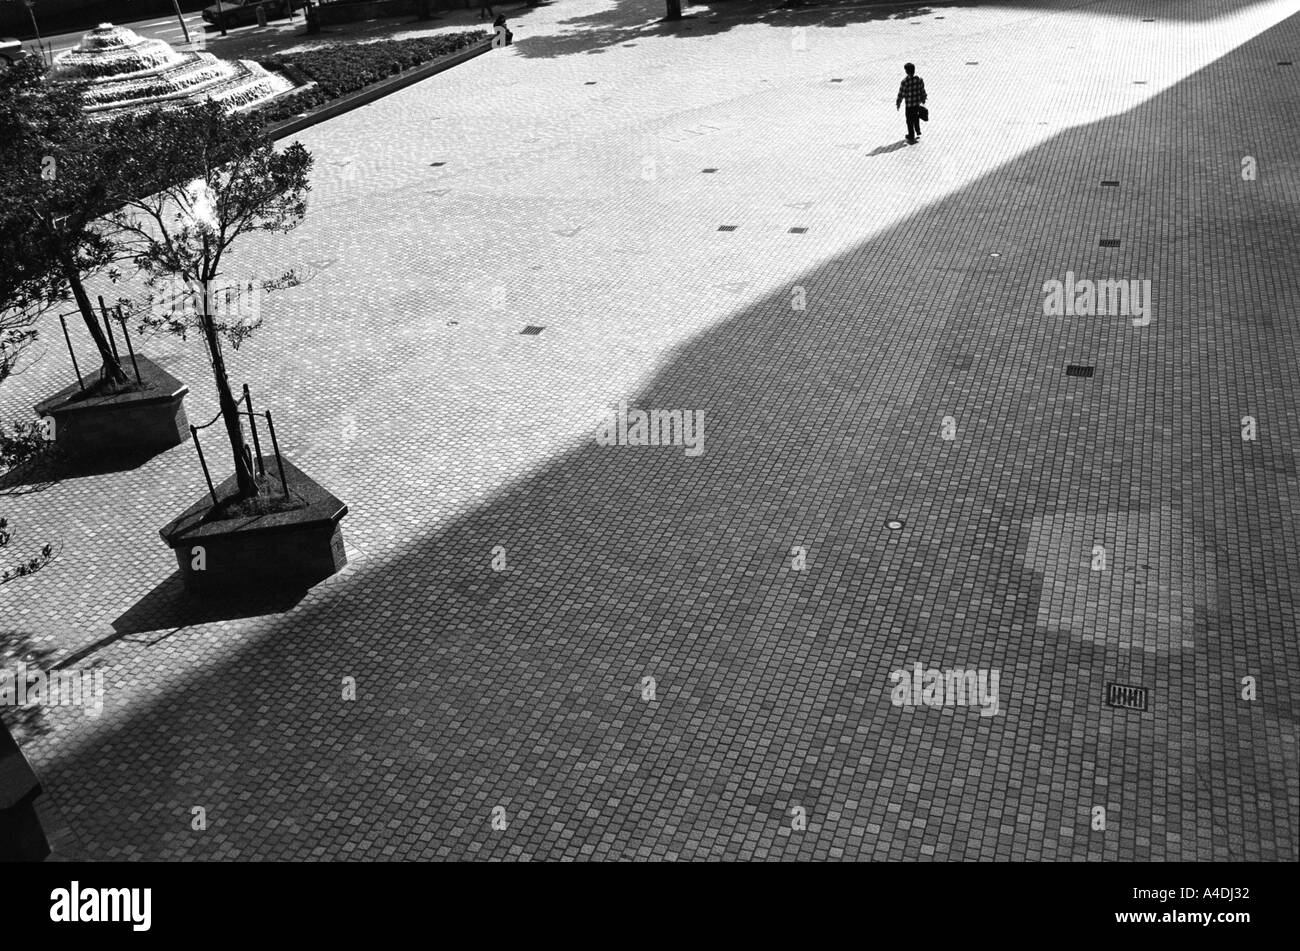 Un uomo che cammina attraverso uno spazio vuoto. Hong Kong, Repubblica Popolare di Cina, RAS DI HONG KONG Foto Stock